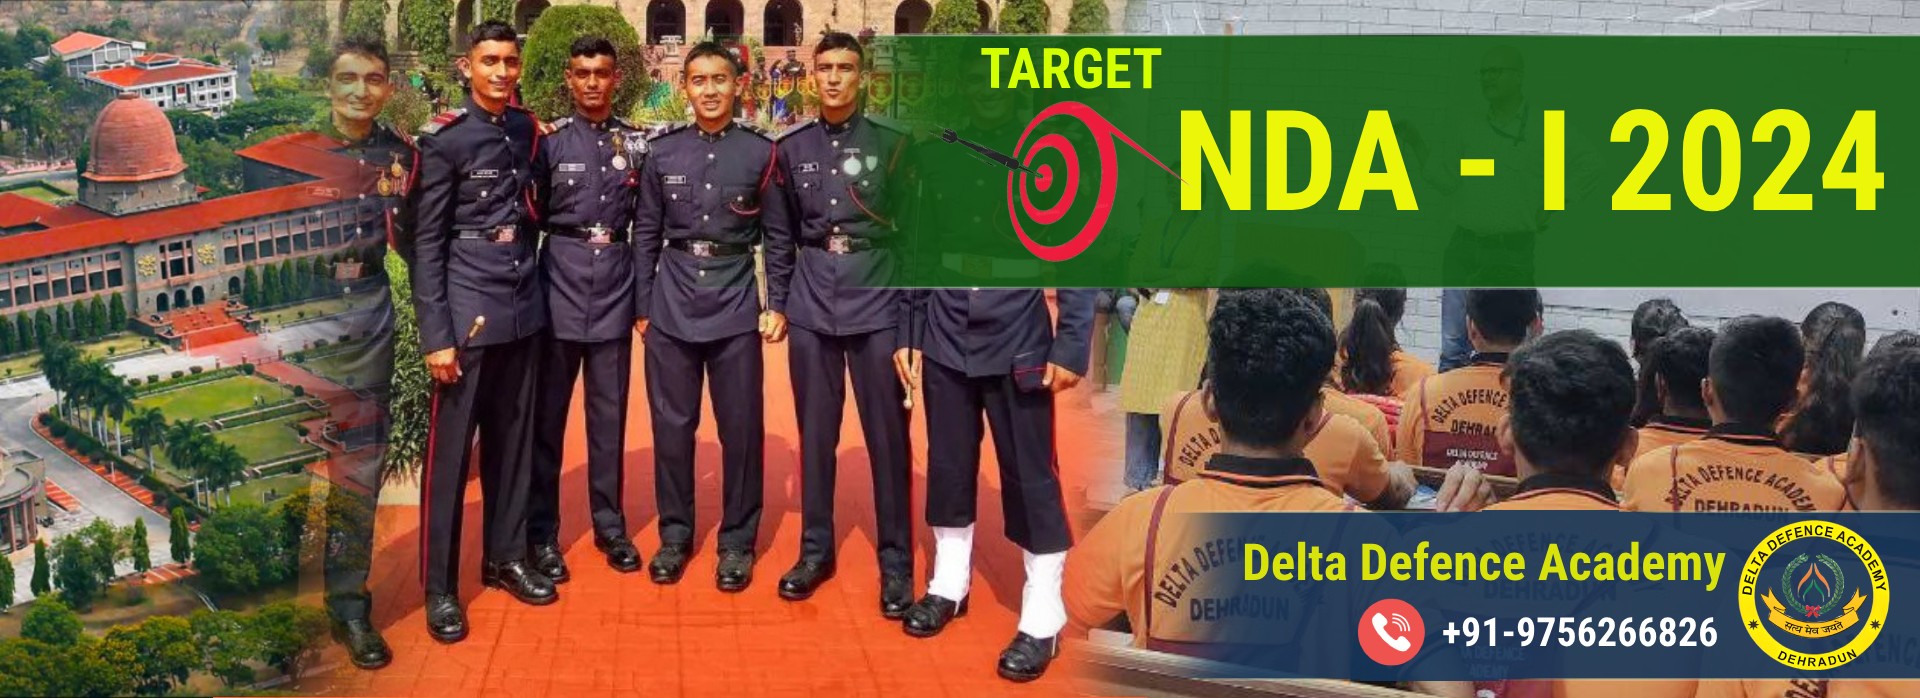 delta defence academy nda coaching new batch notification